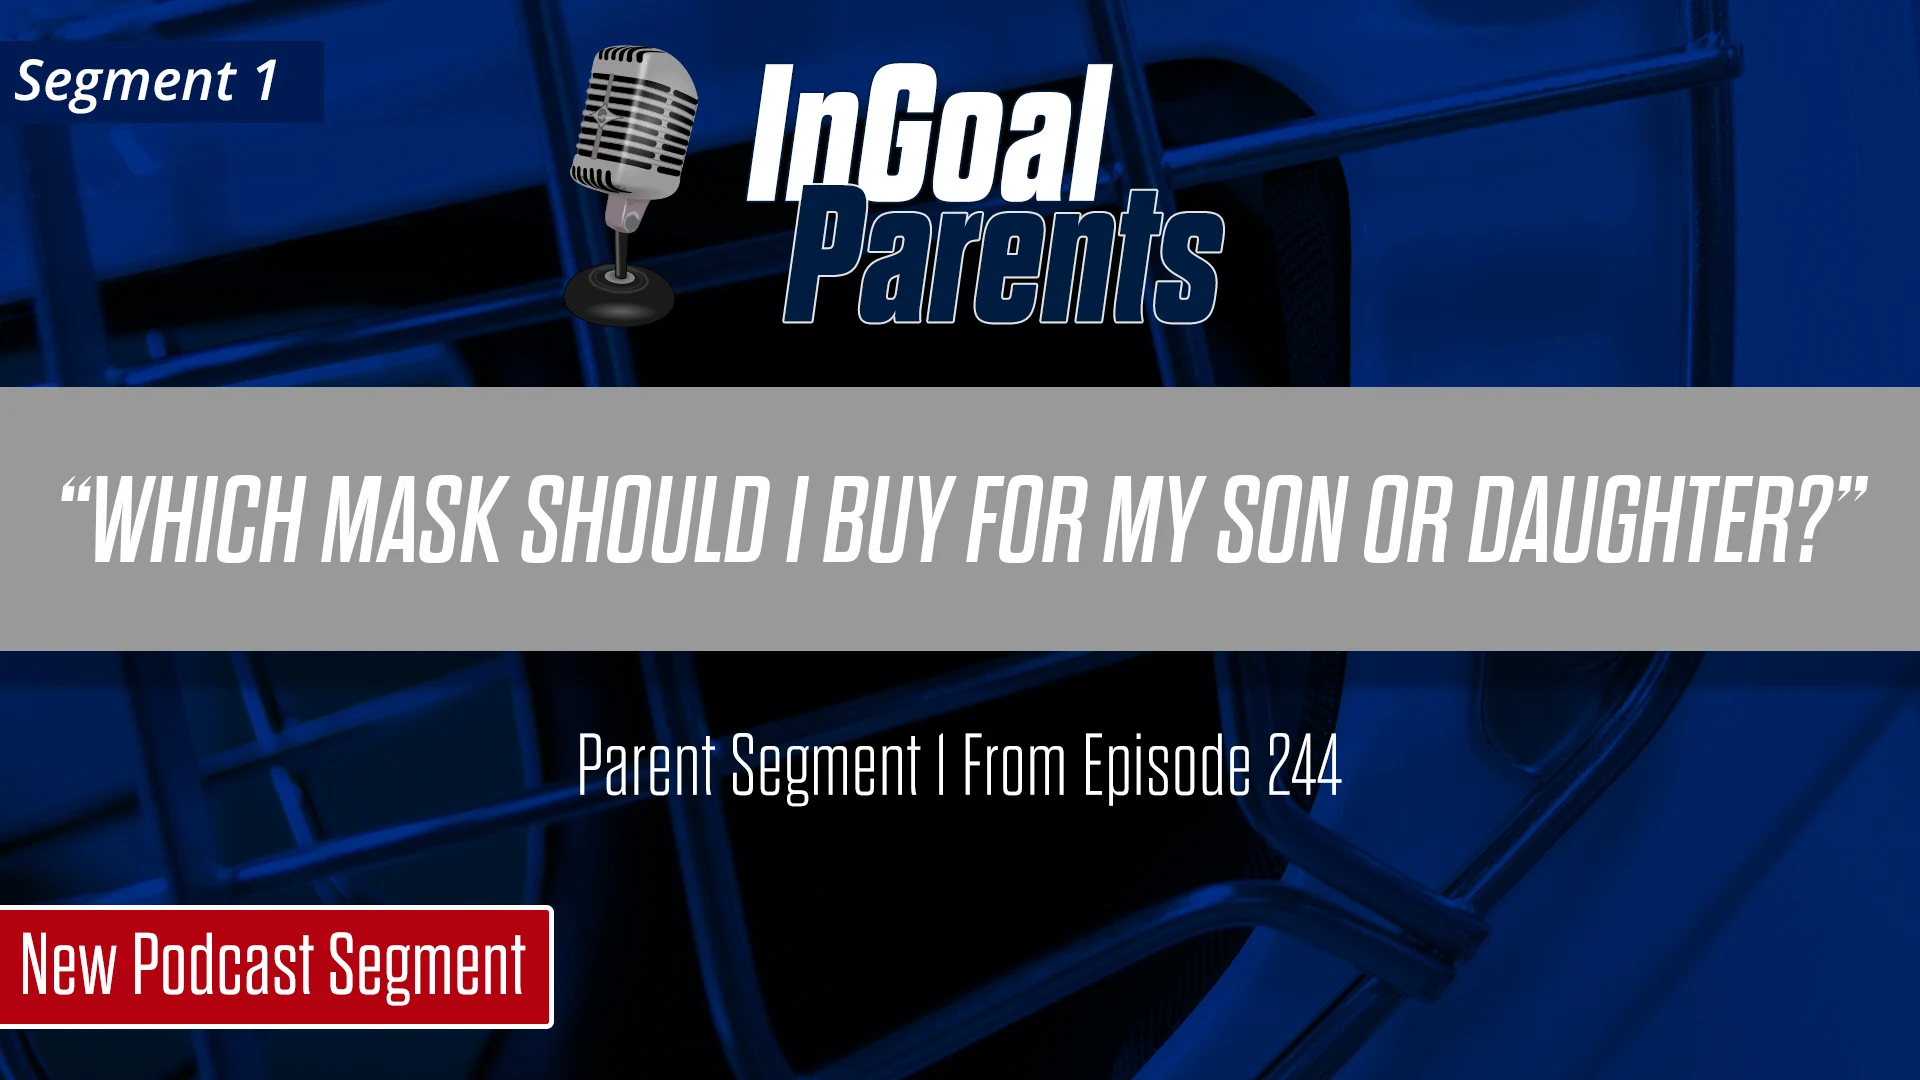 NEW Podcast Segment for Parents